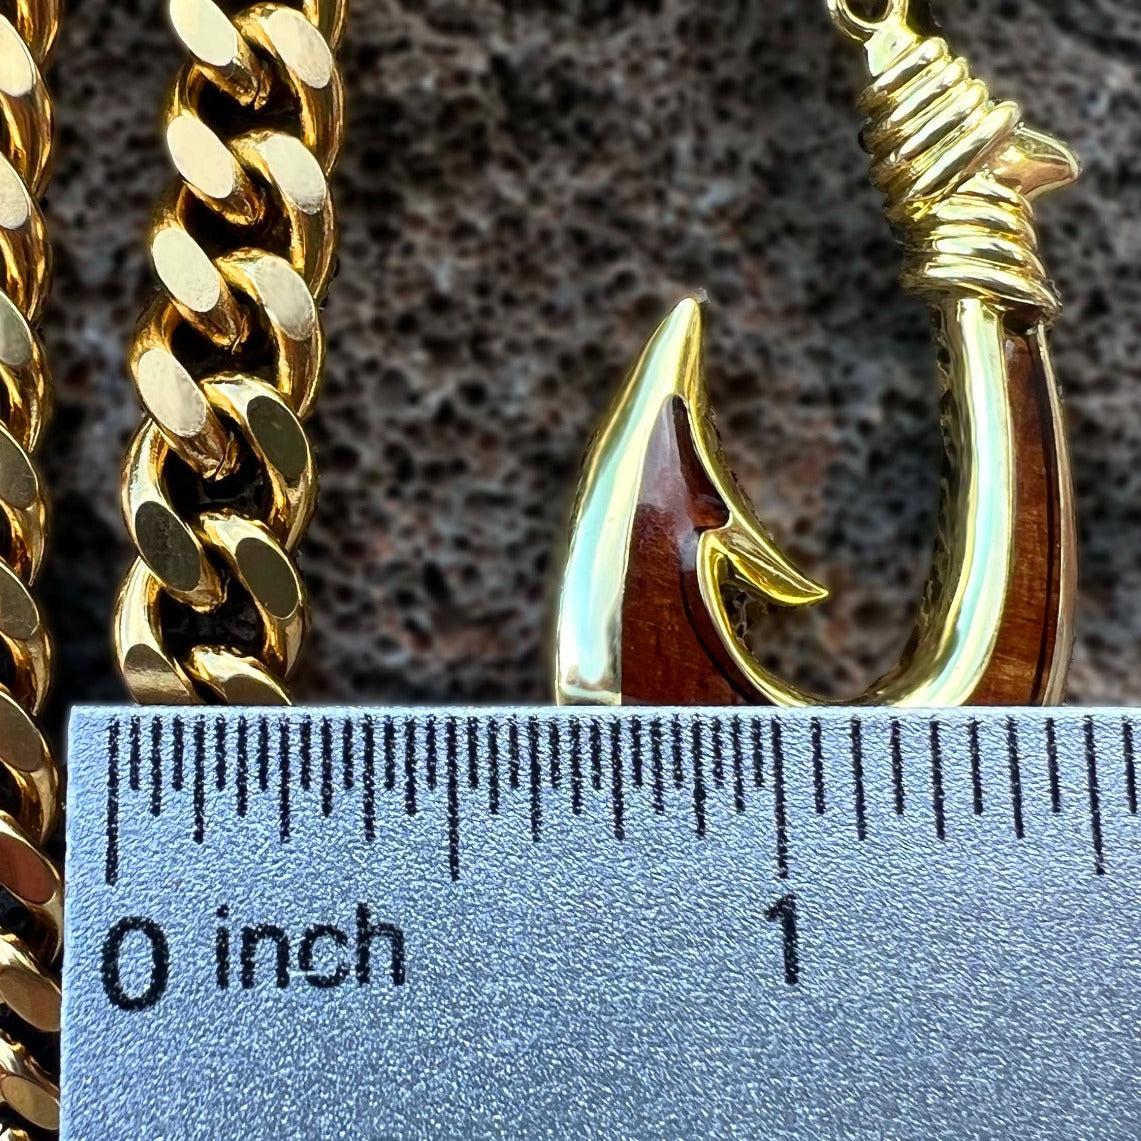 Fishhook Necklace -  Australia